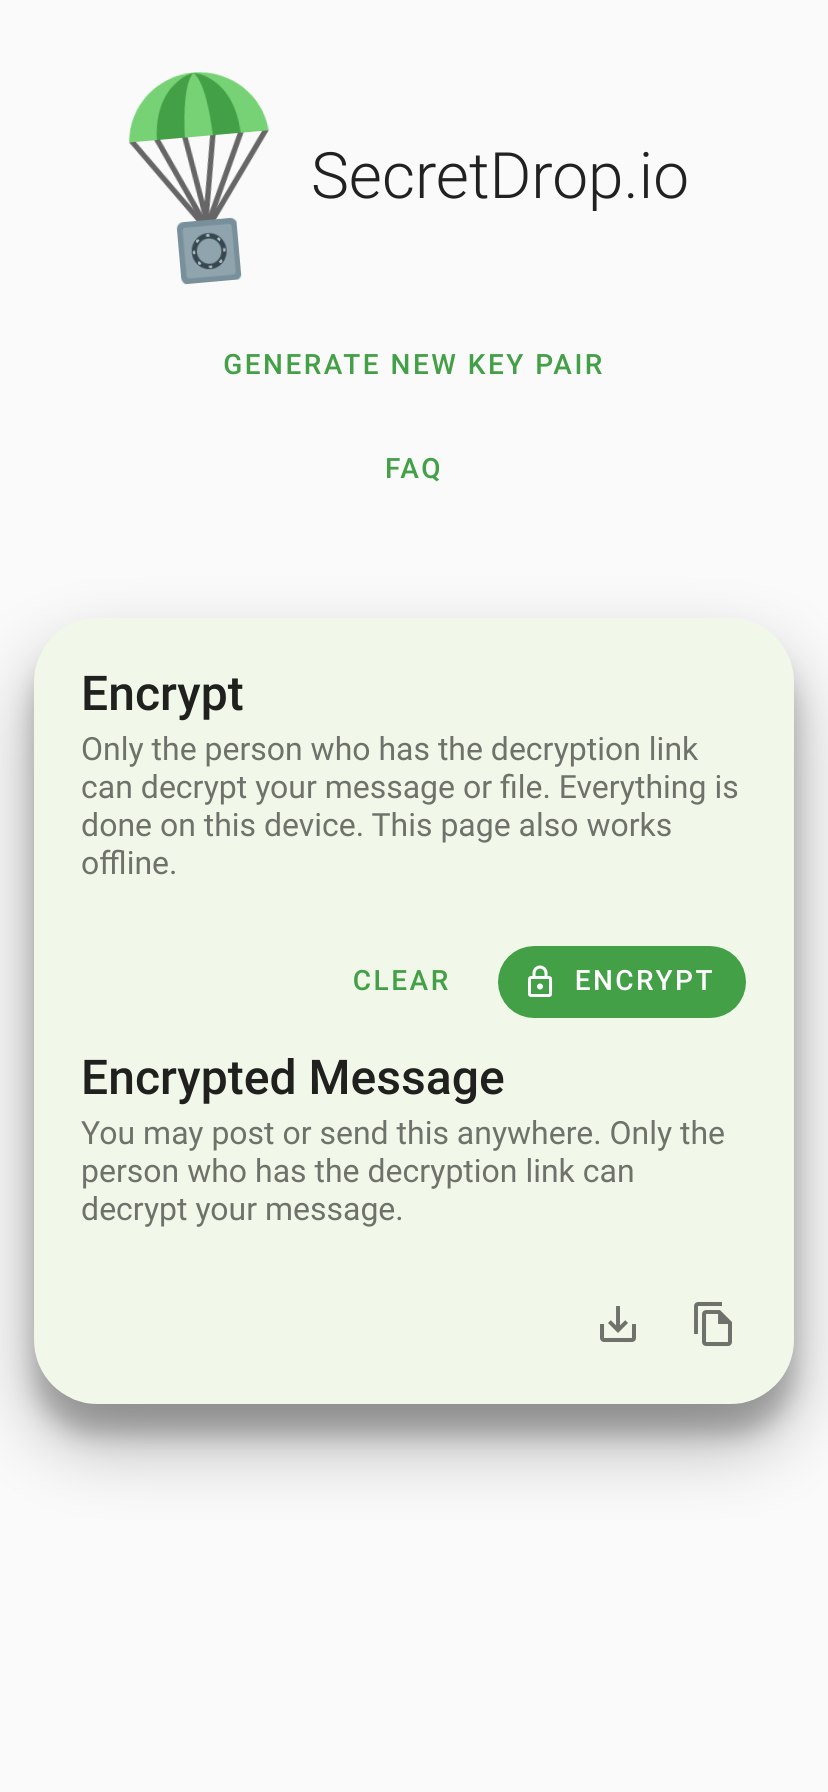 main-test-ts-encrypt-decrypt-encrypt-page-text-encryption-screenshot-414-896-0-snap.png